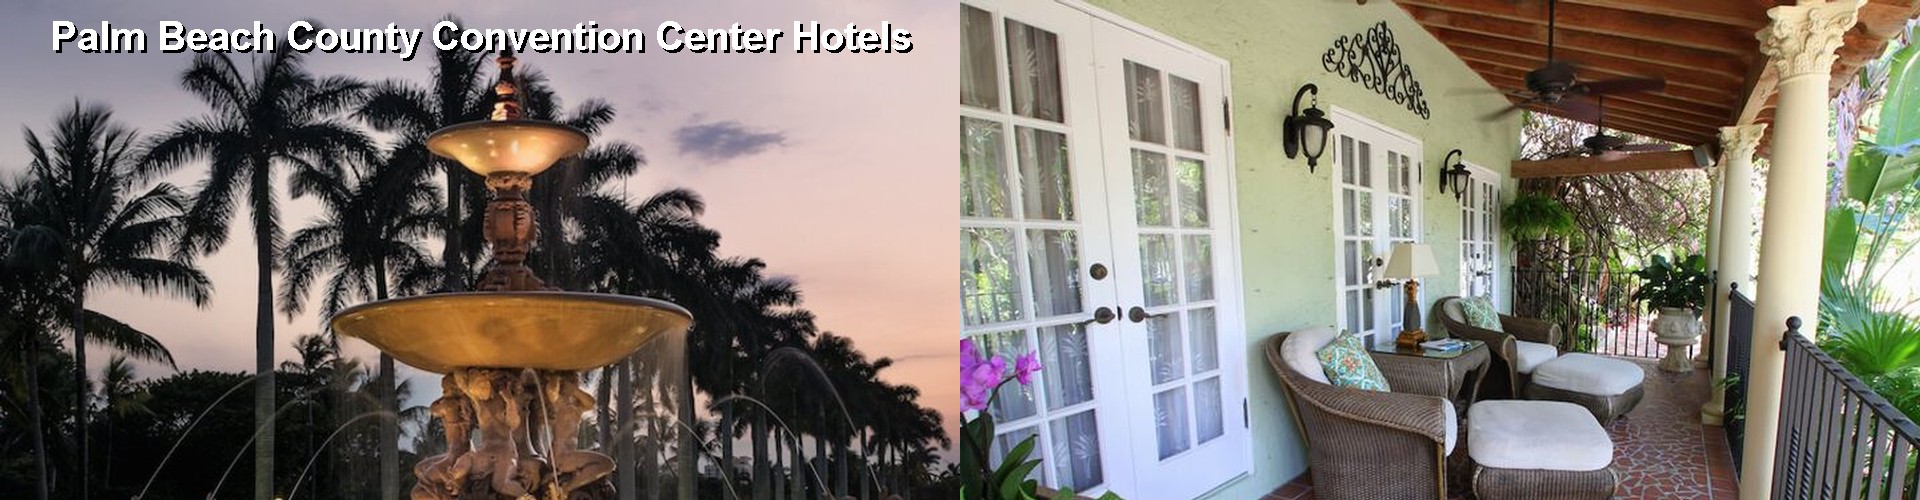 5 Best Hotels near Palm Beach County Convention Center